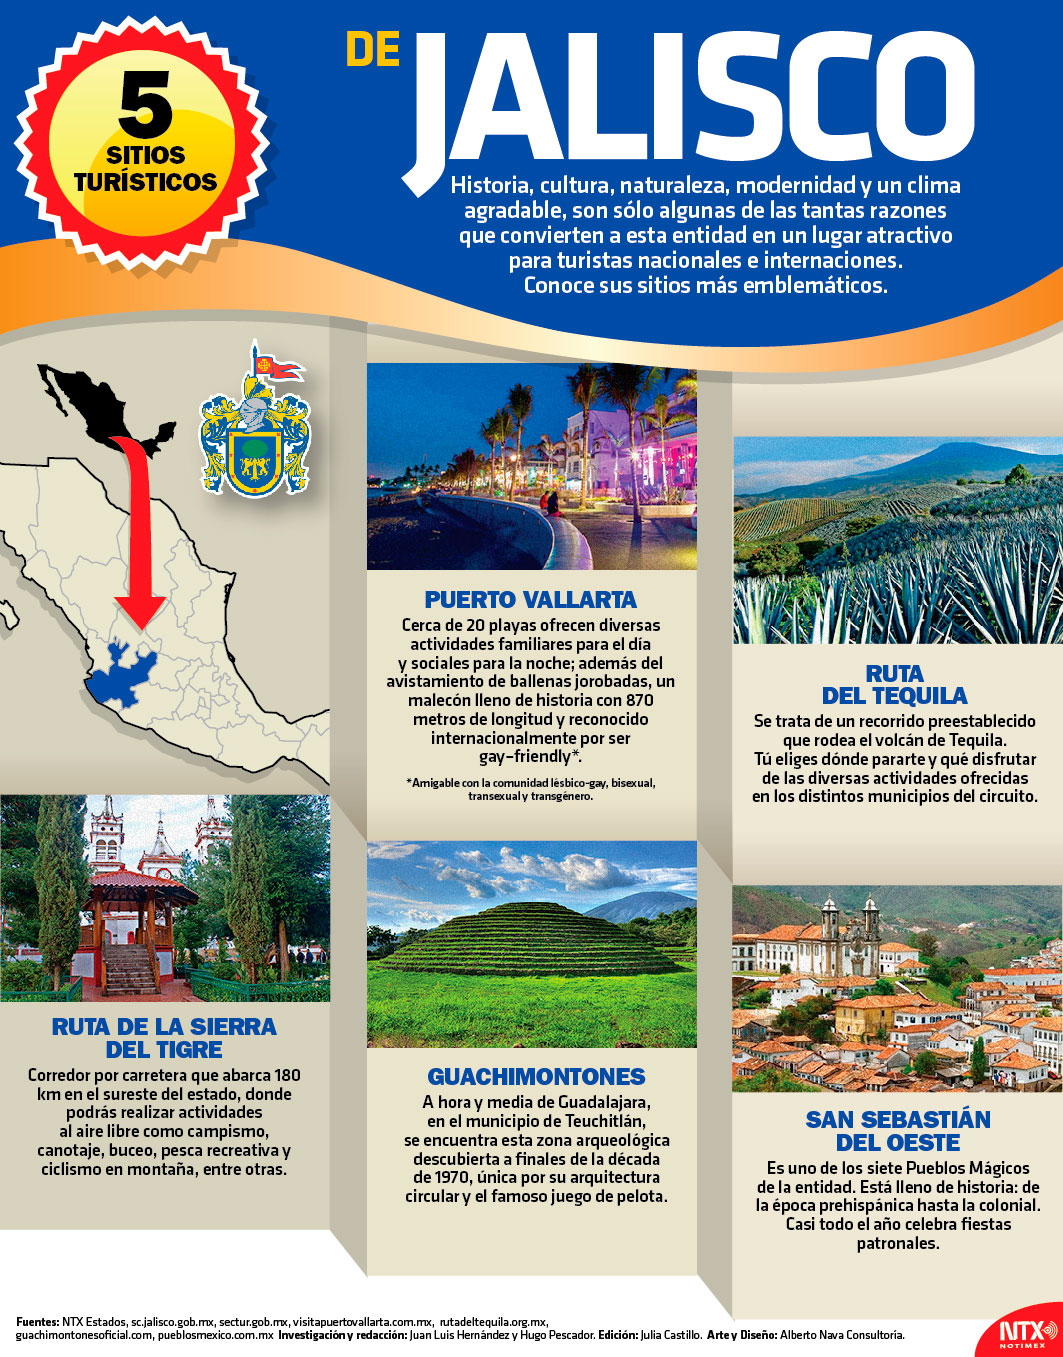 5 sitios tursticos de Jalisco